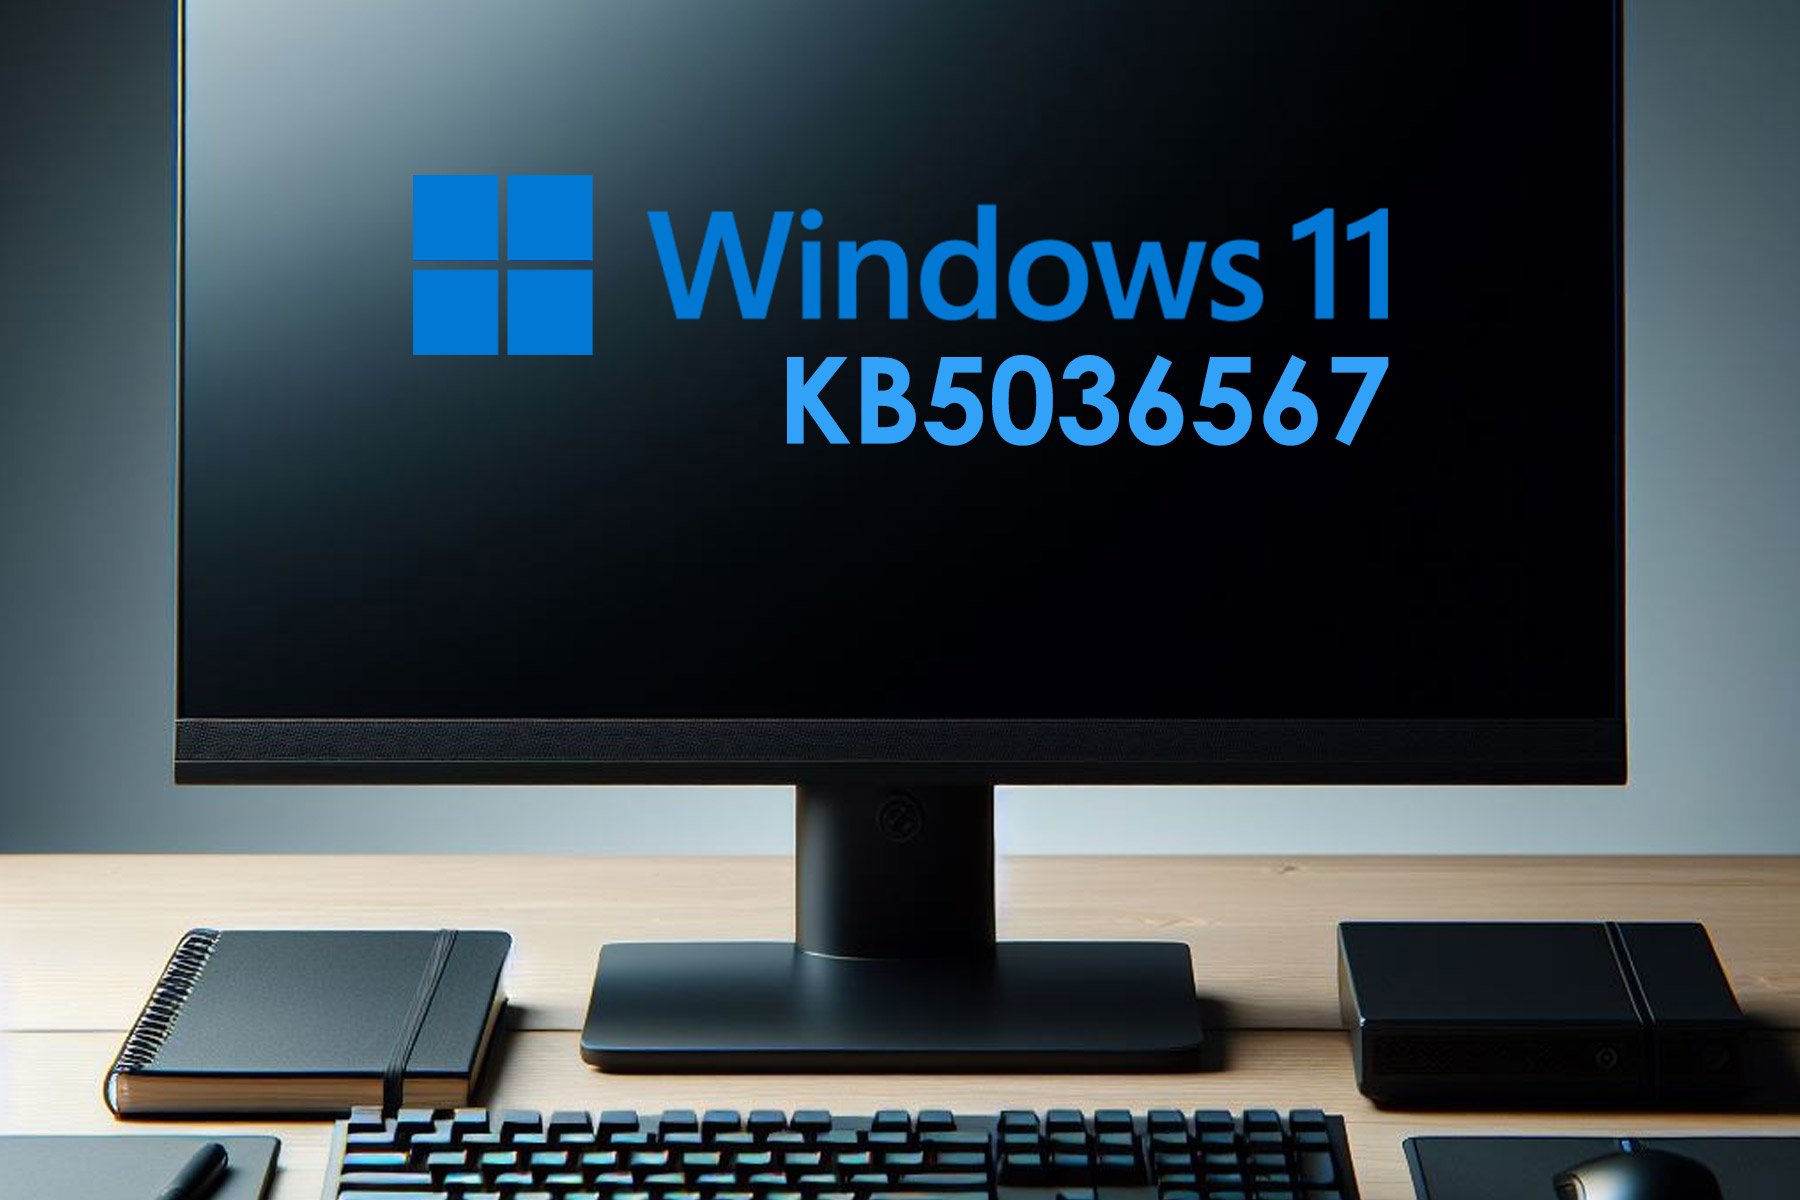 KB5036567 windows 11